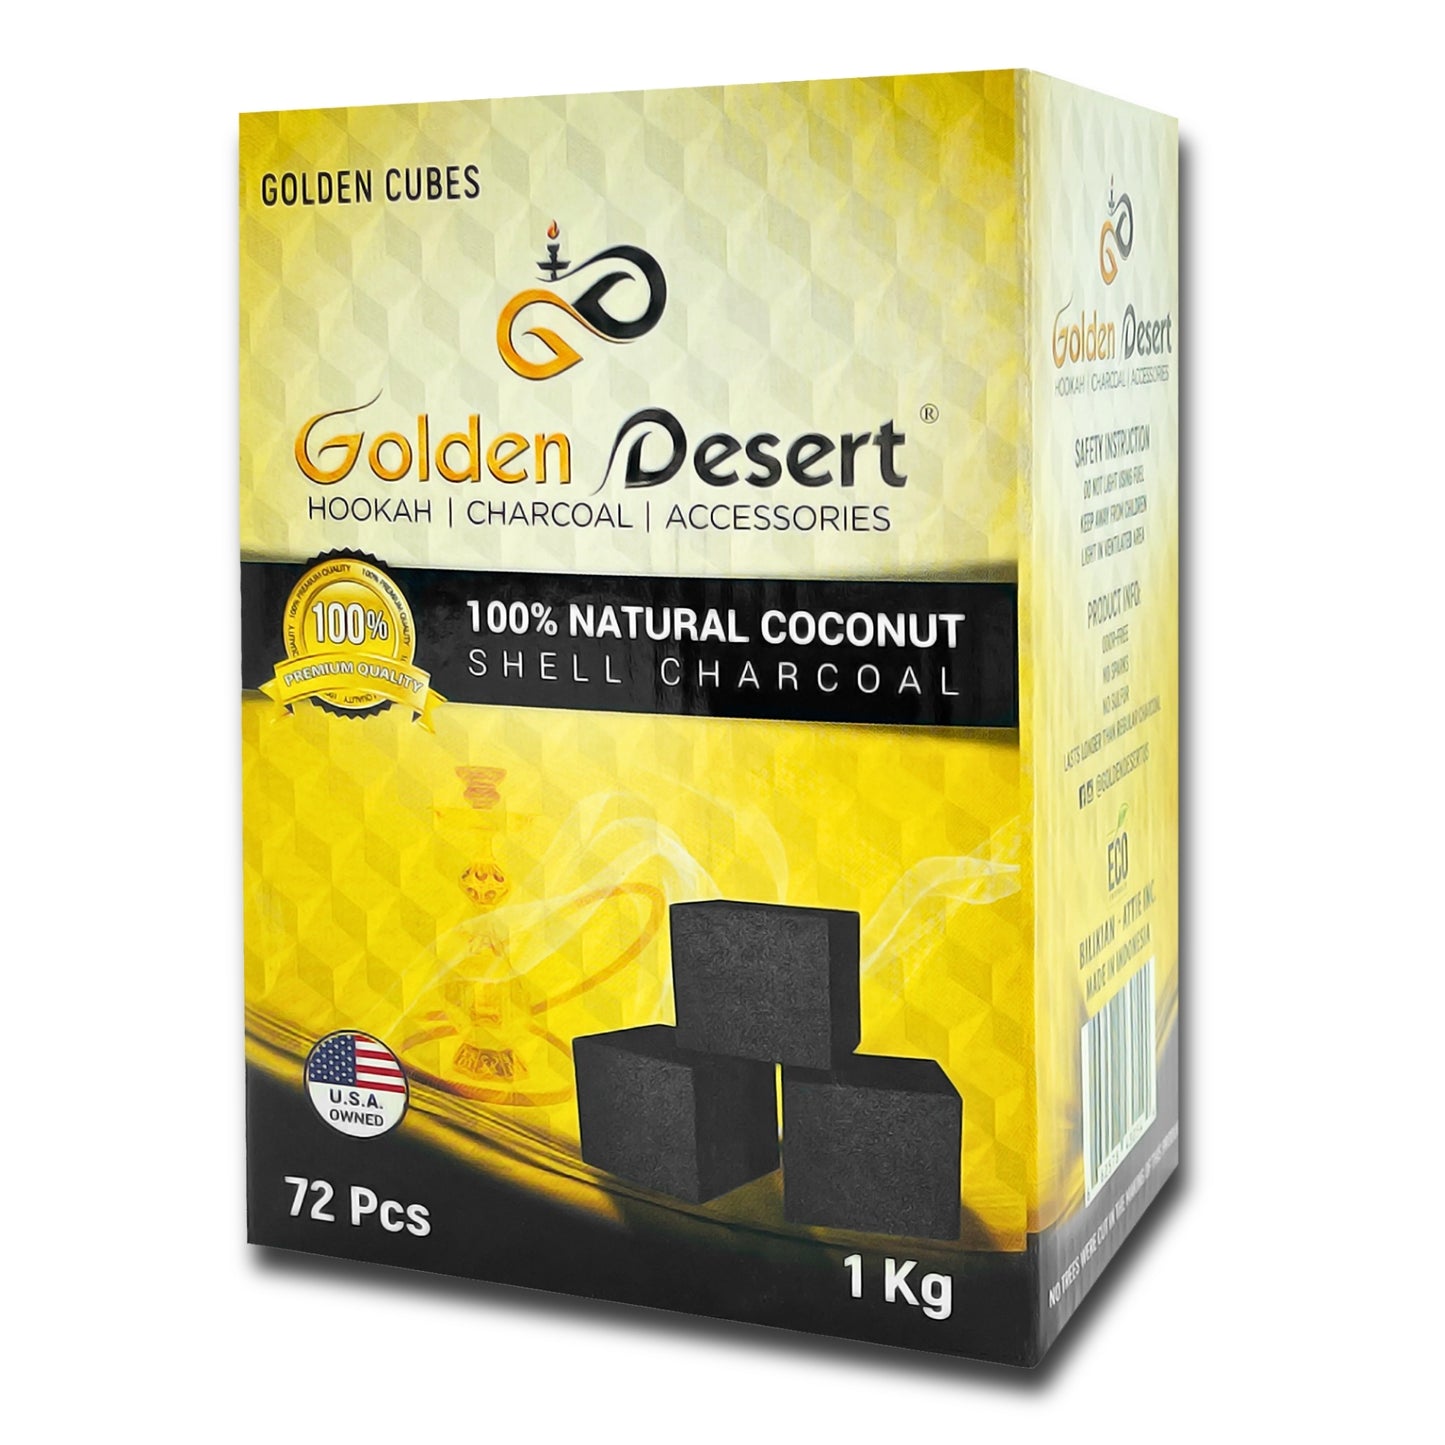 Golden Desert 1 kg cube box coconut charcoal